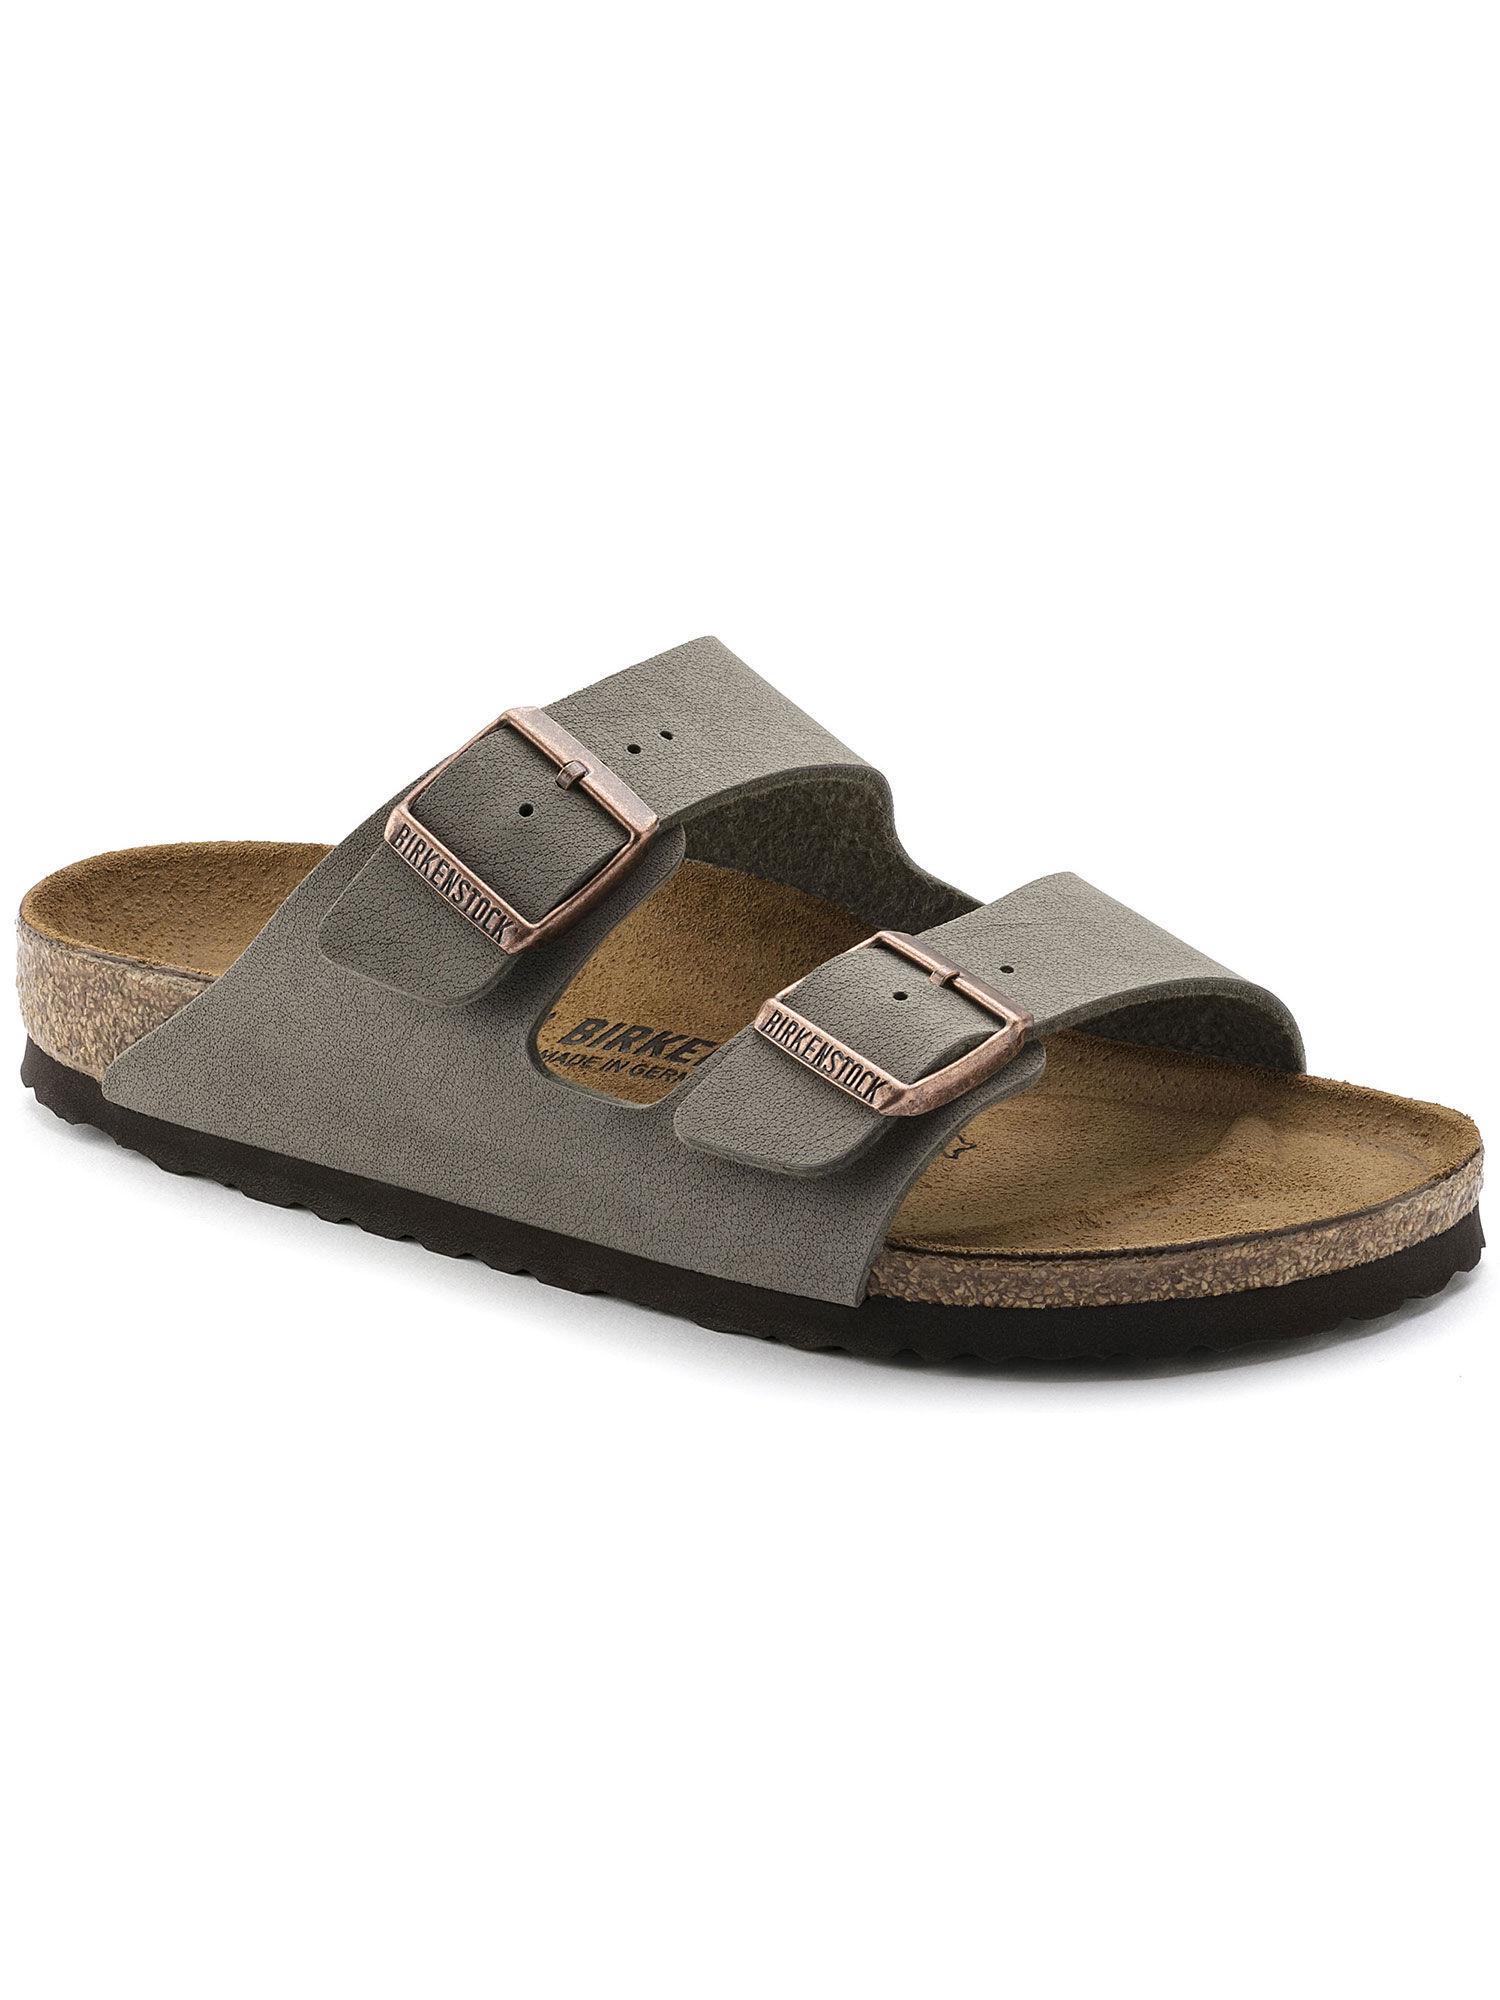 grey arizona solid narrow width sandals